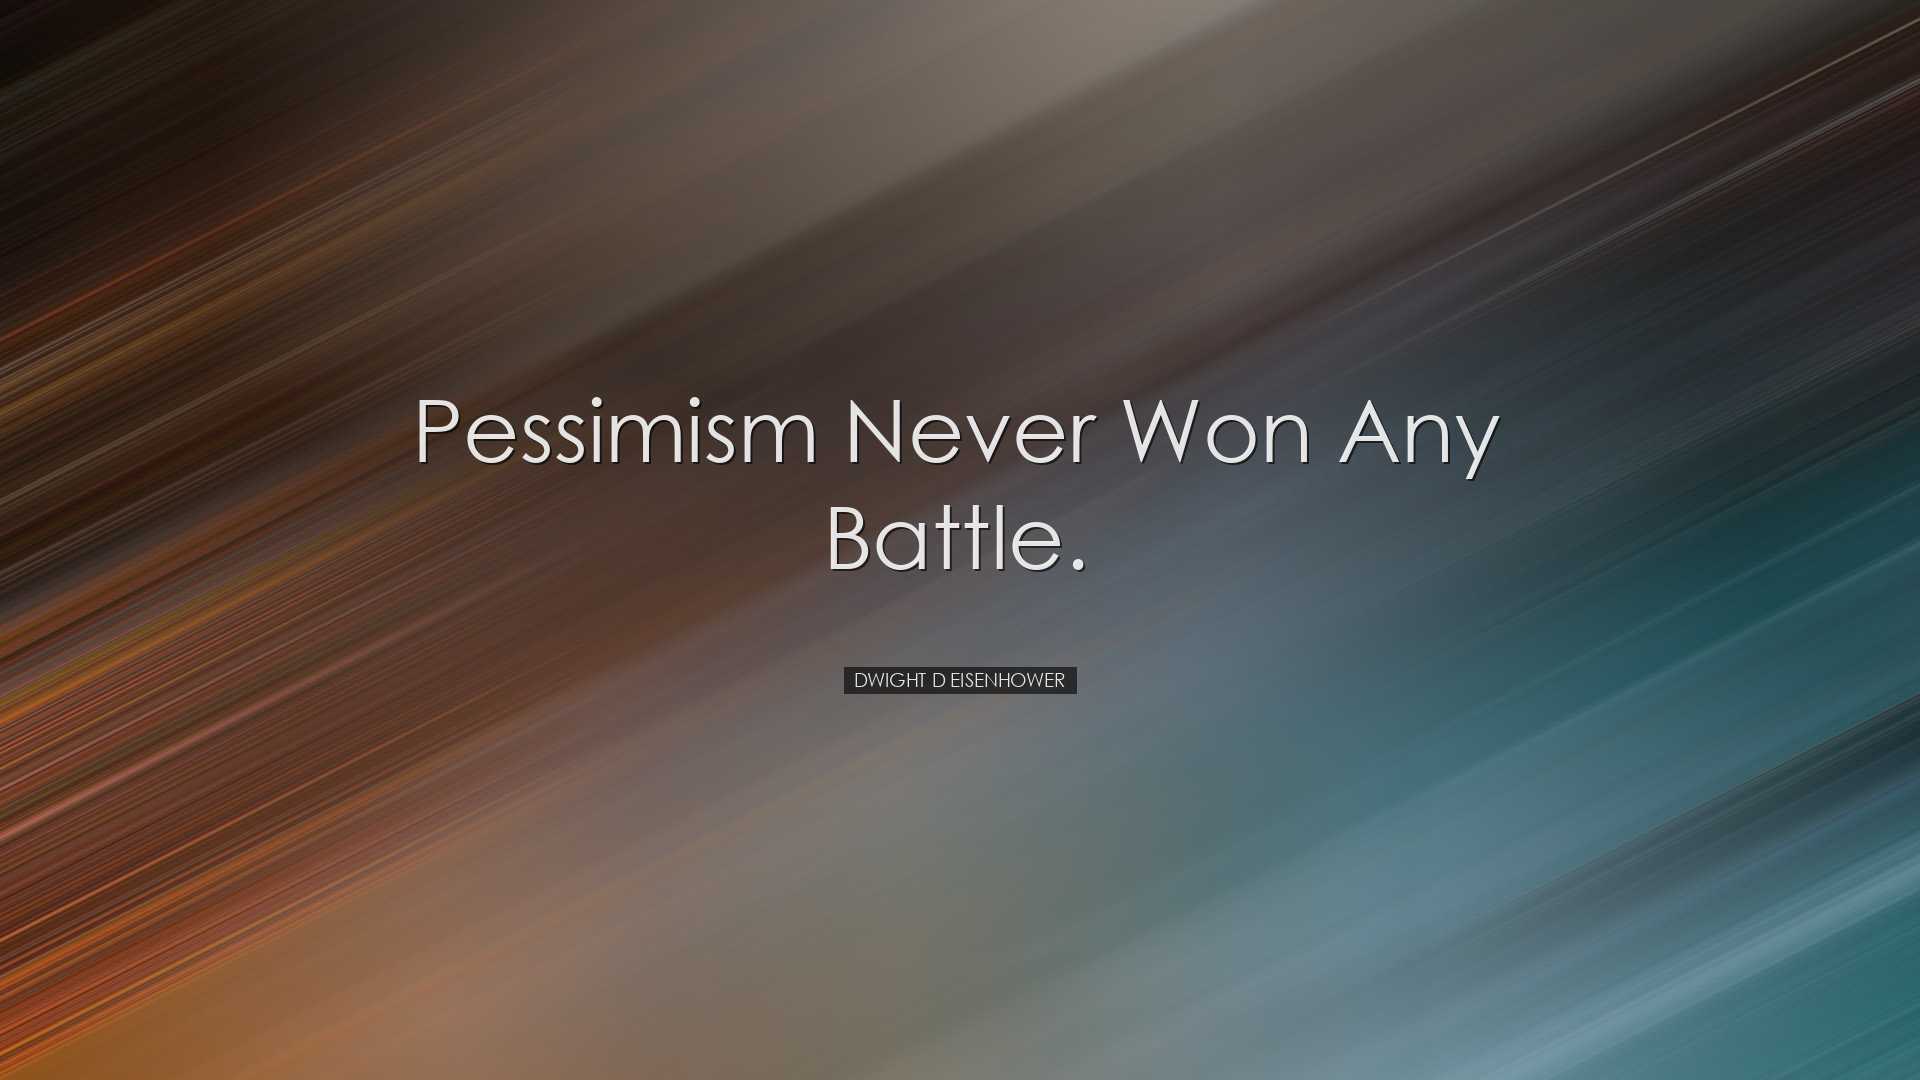 Pessimism never won any battle. - Dwight D Eisenhower